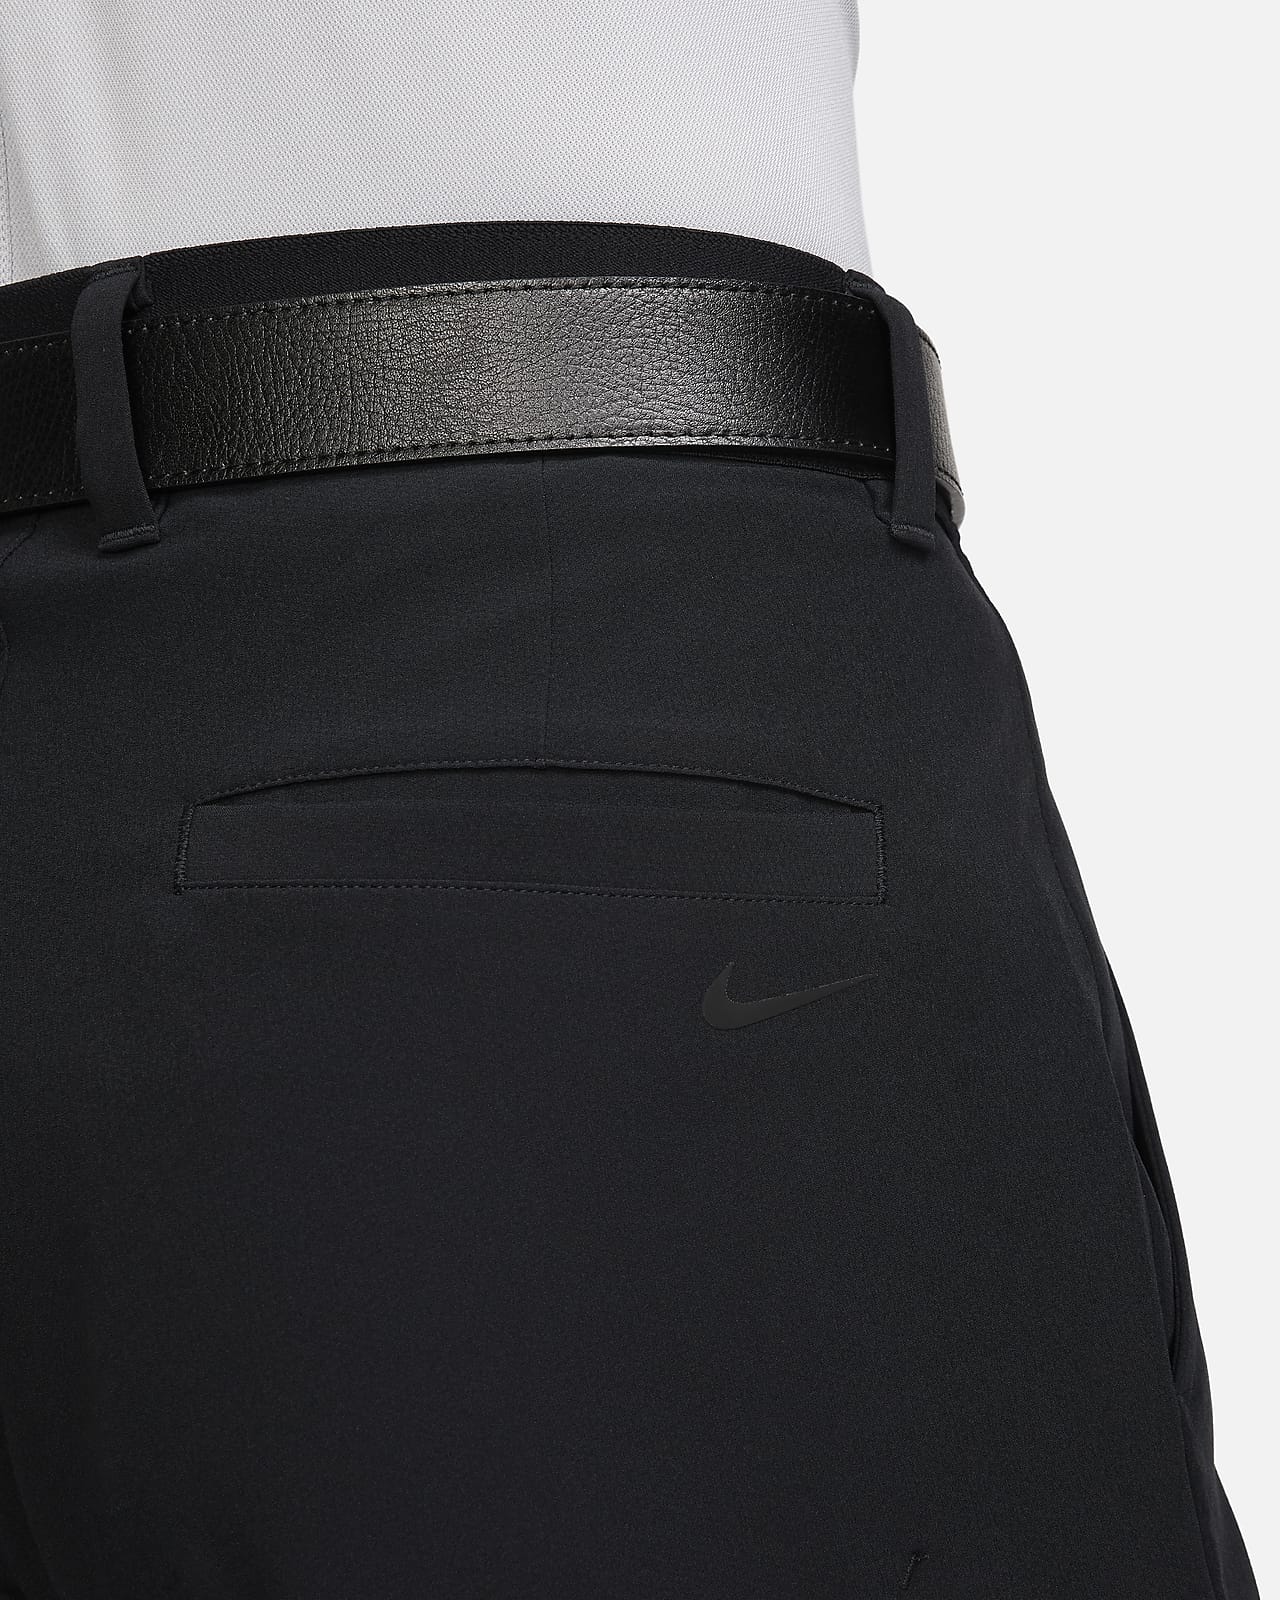 Nike Tour Repel Flex Men's Slim Golf Pants